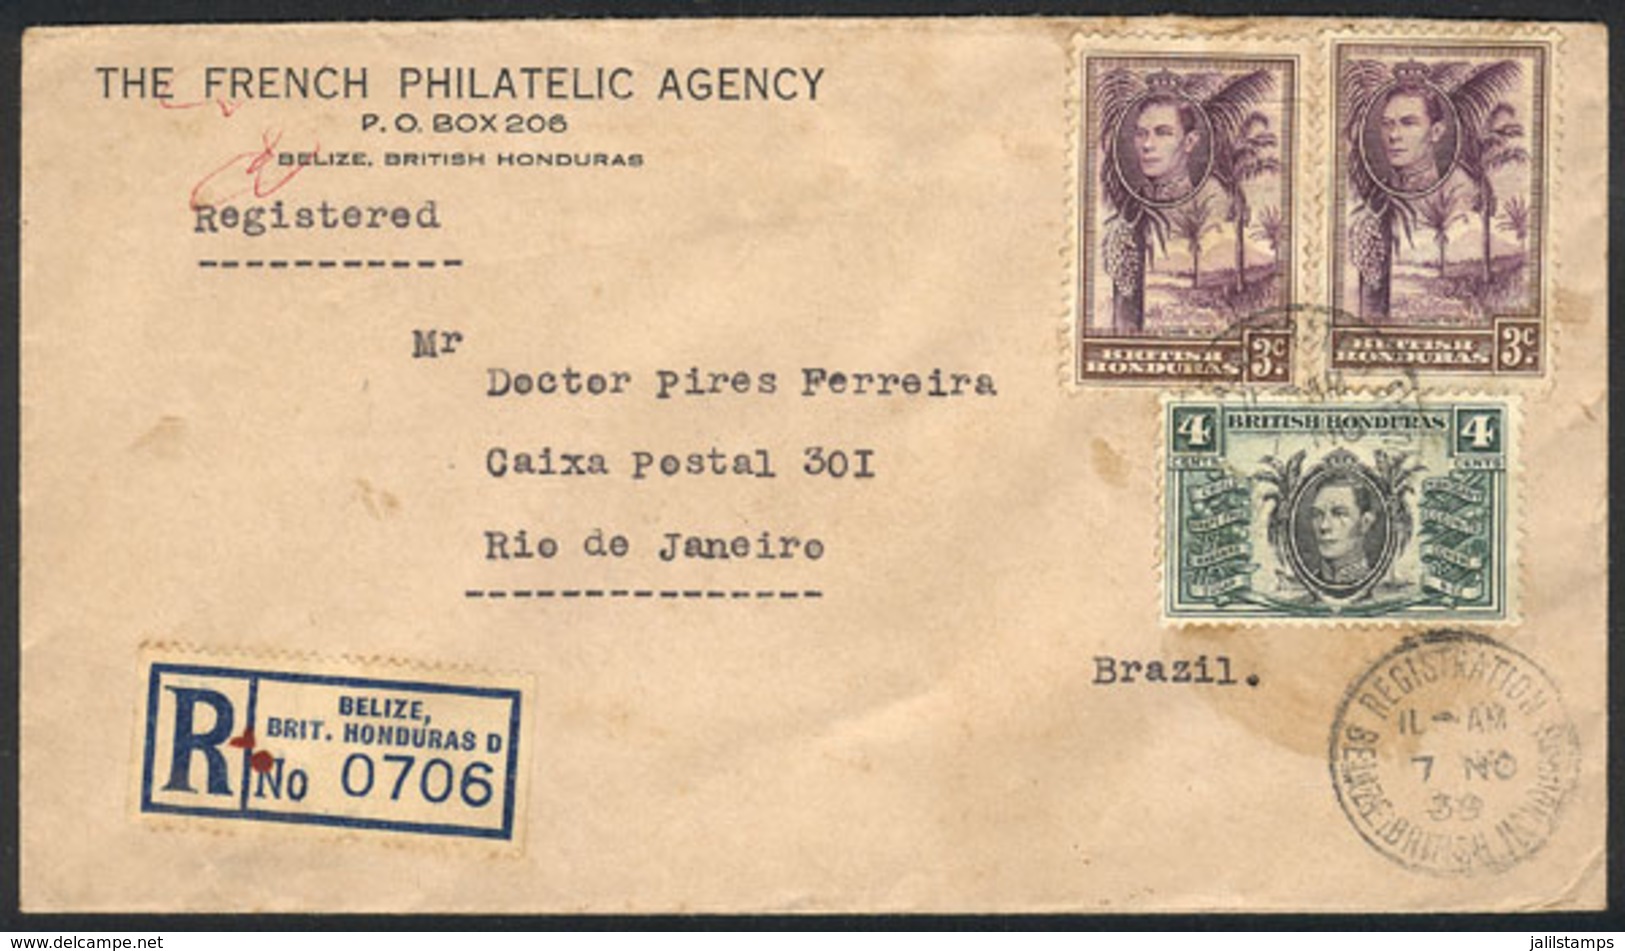 BRITISH HONDURAS: Registered Cover Sent From Belize To Brazil On 7/NO/1939 Franked With 10c., VF Quality, Rare Destinati - British Honduras (...-1970)